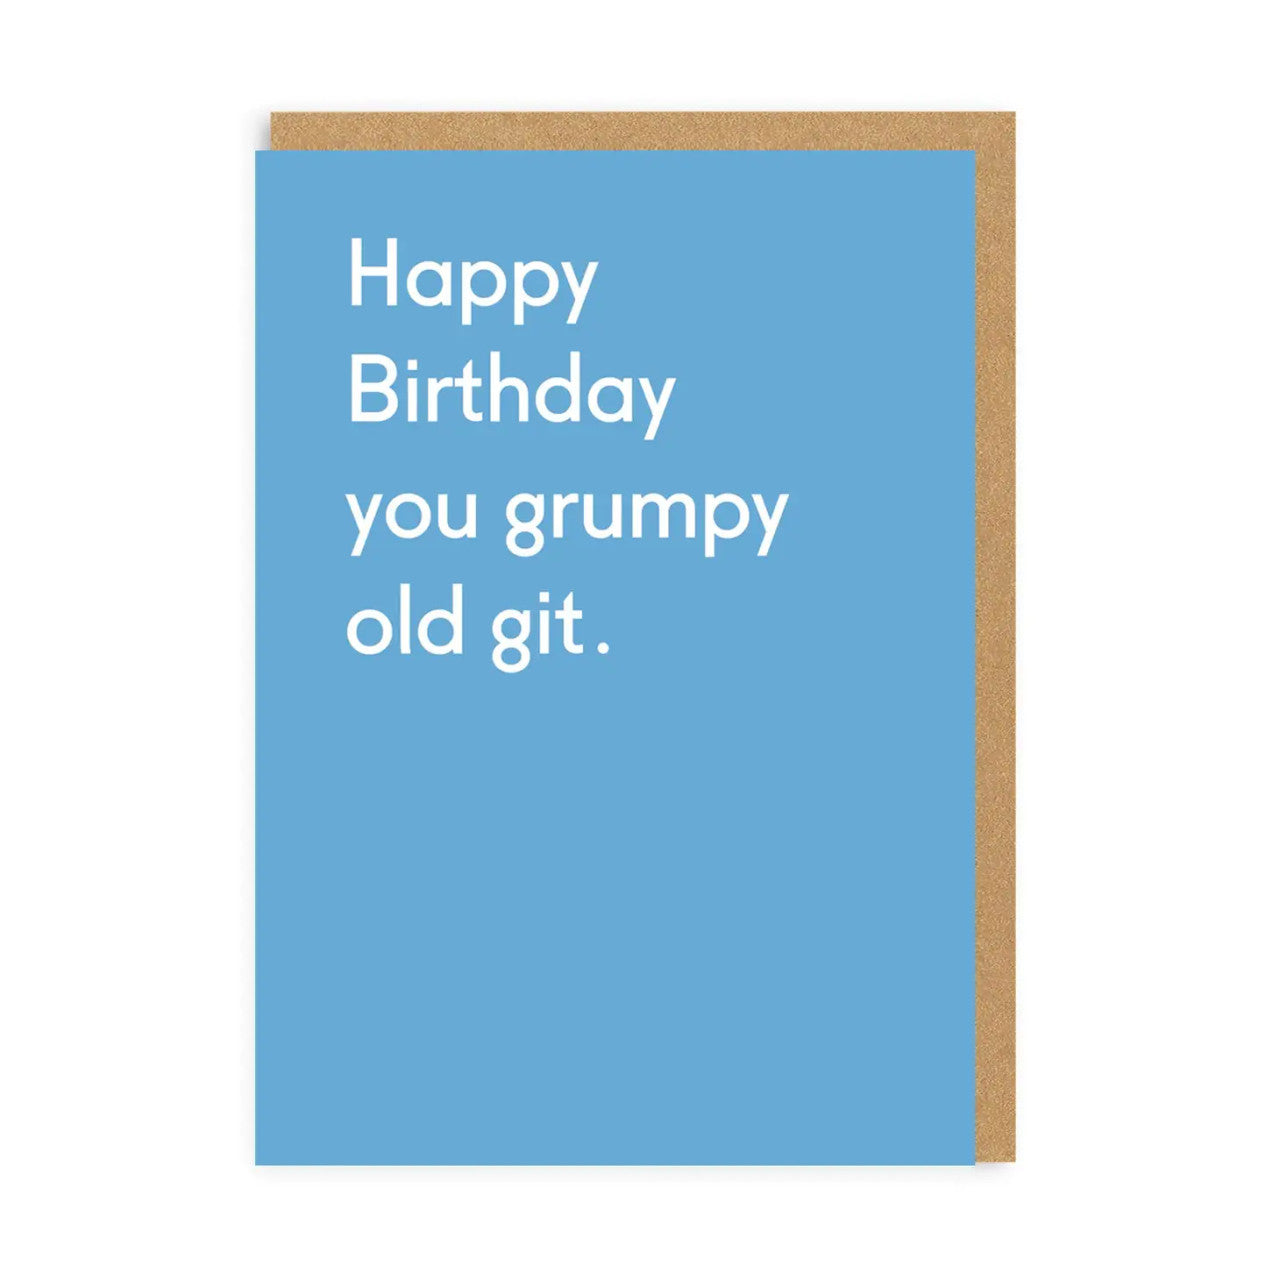 Birthday Card text reads "Happy Birthday you grumpy old git"